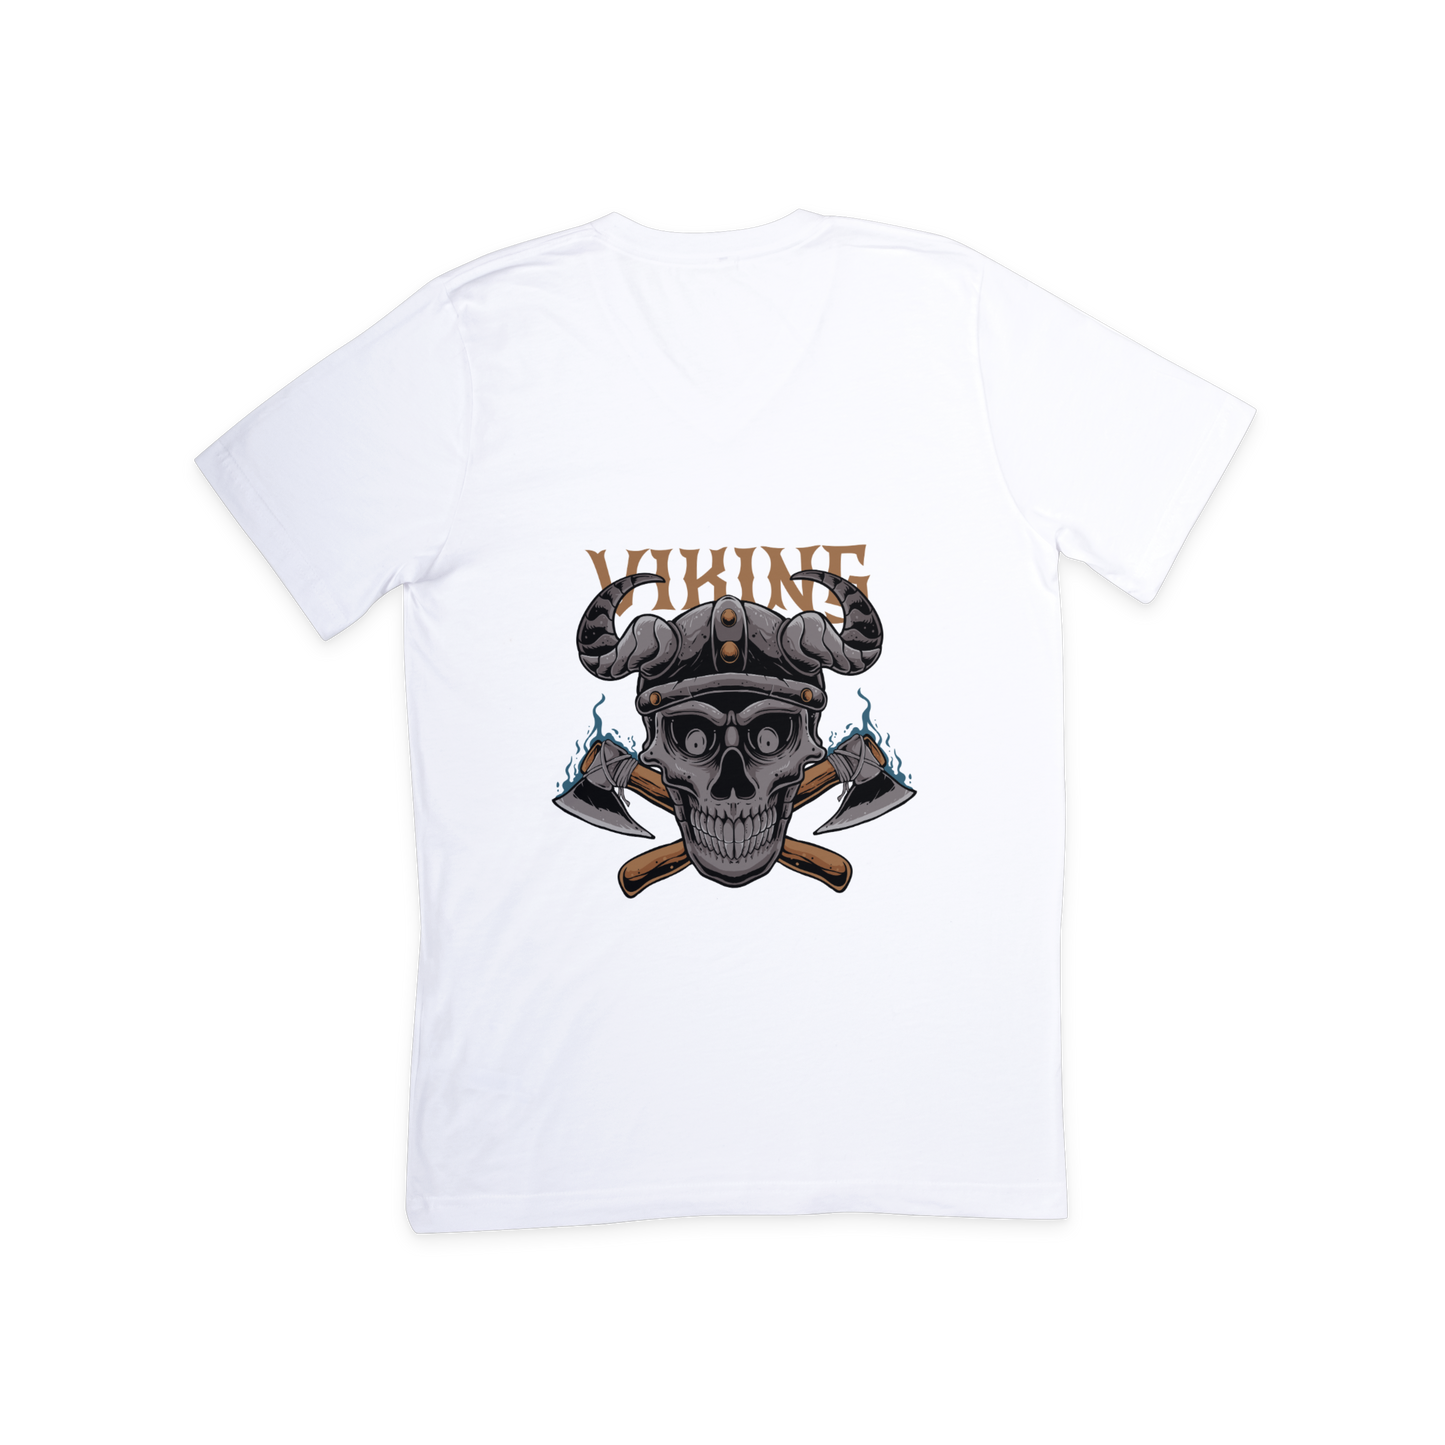 Vikine Design T-shirt